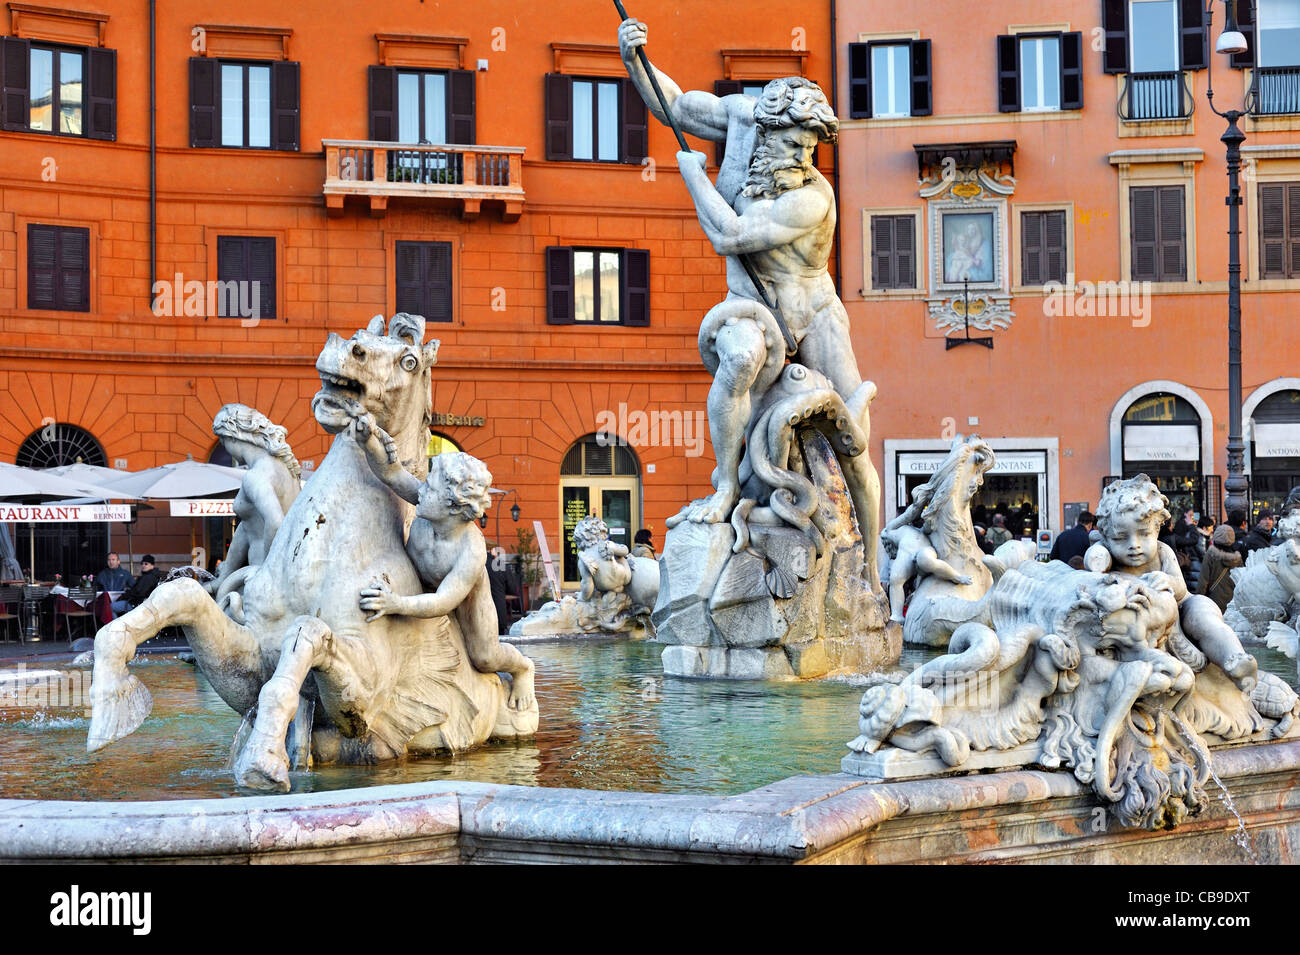 Fontaine de Neptune, Piazza Navona, Rome, Italie. Banque D'Images